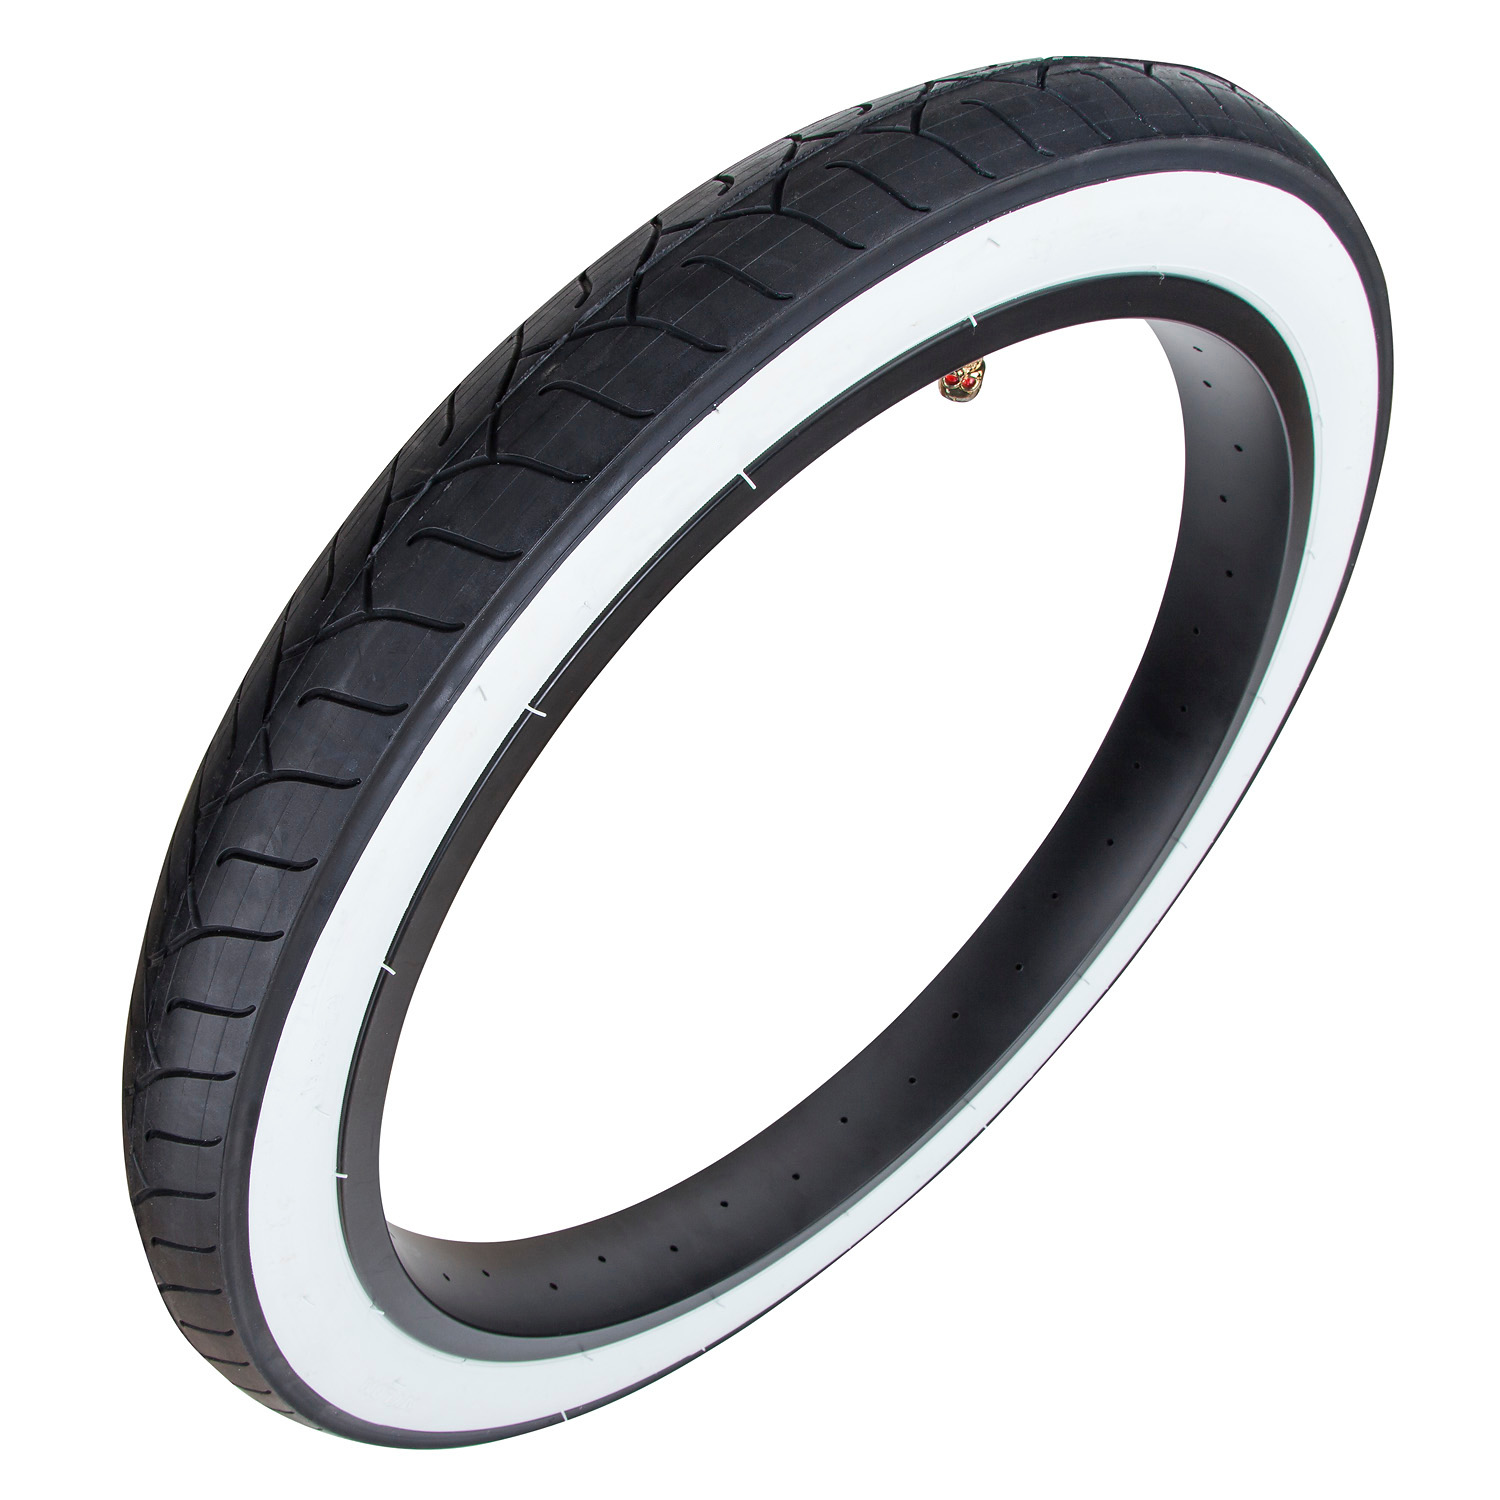 Tire 26 x 3.0, white wall